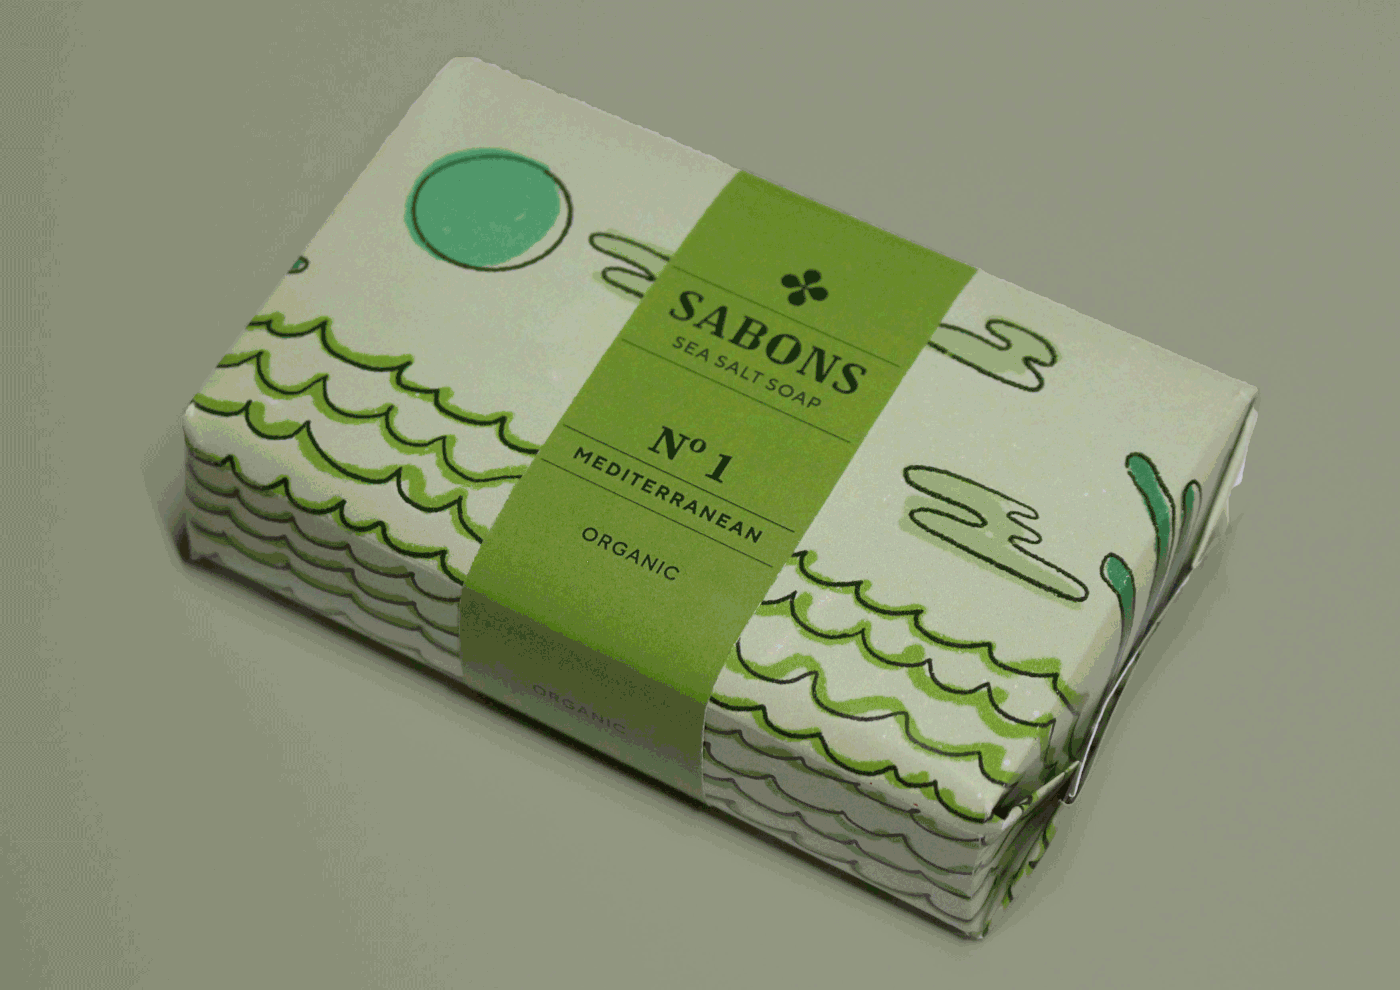 Caribe Caribean jabon japan JAPON mediterranean mediterraneo Packaging sabons soap